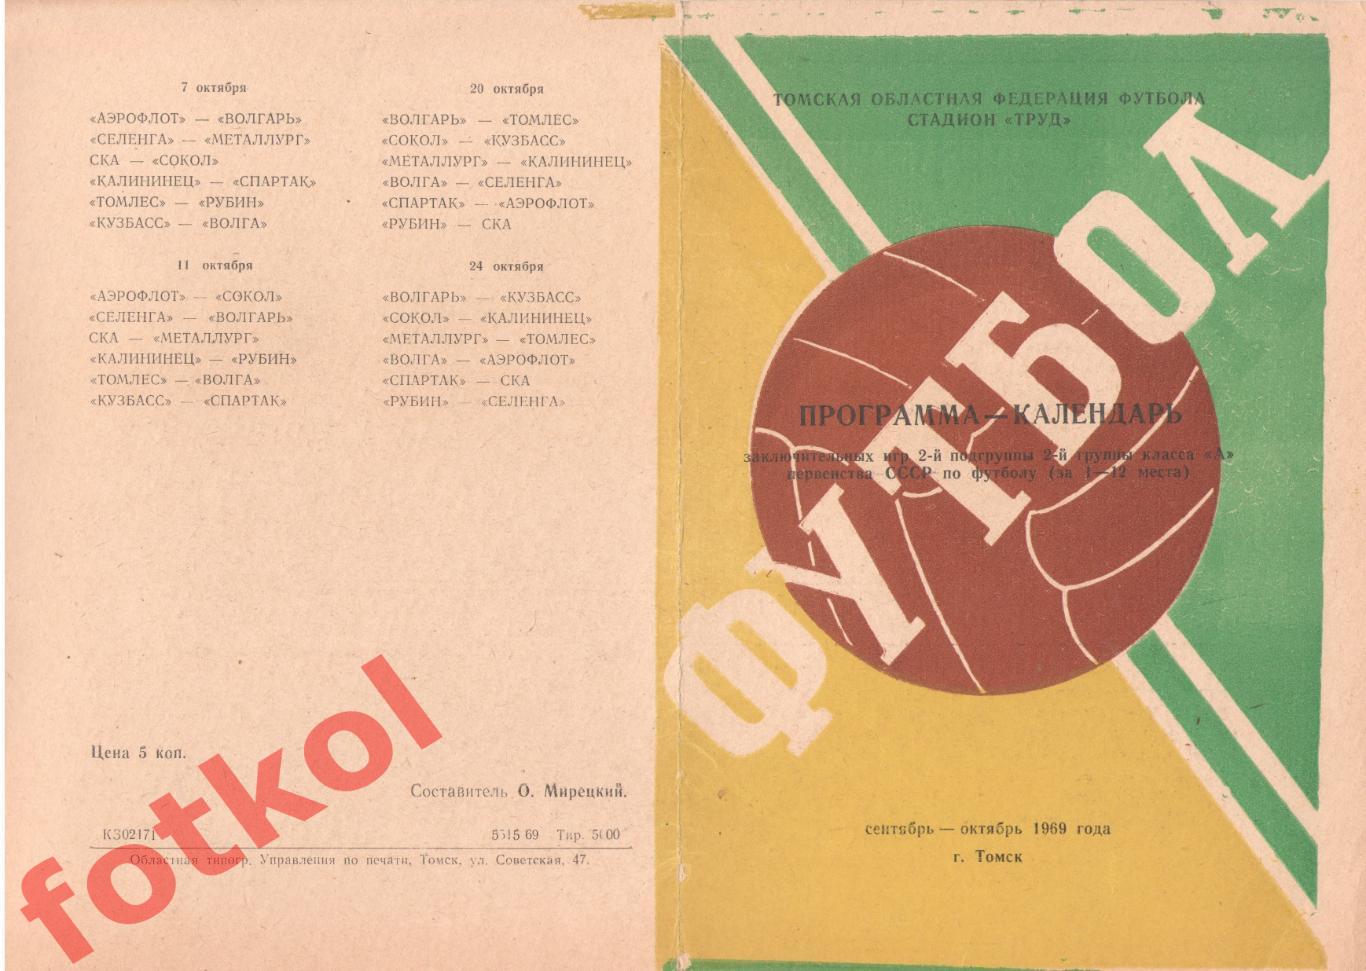 ТОМЛЕС Томск 1969 программа - календарь